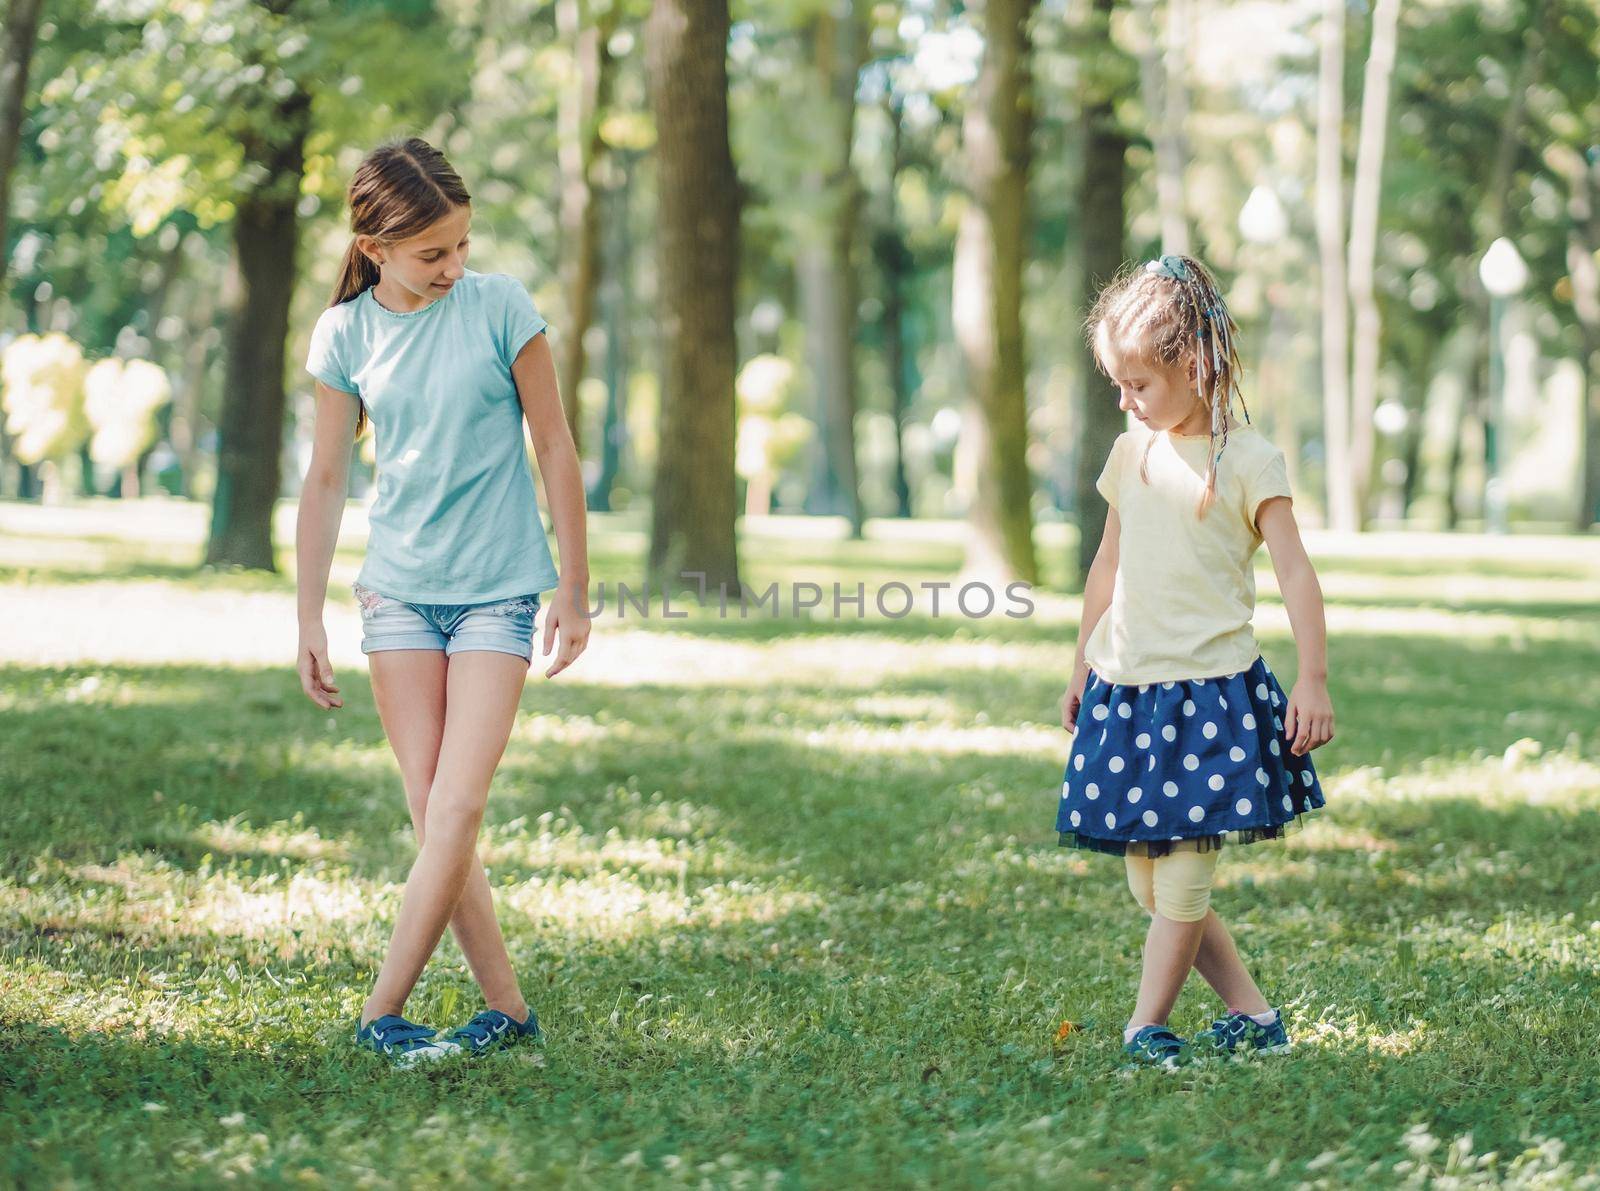 Little girls sisters making ballet training together in green park outside in summertime